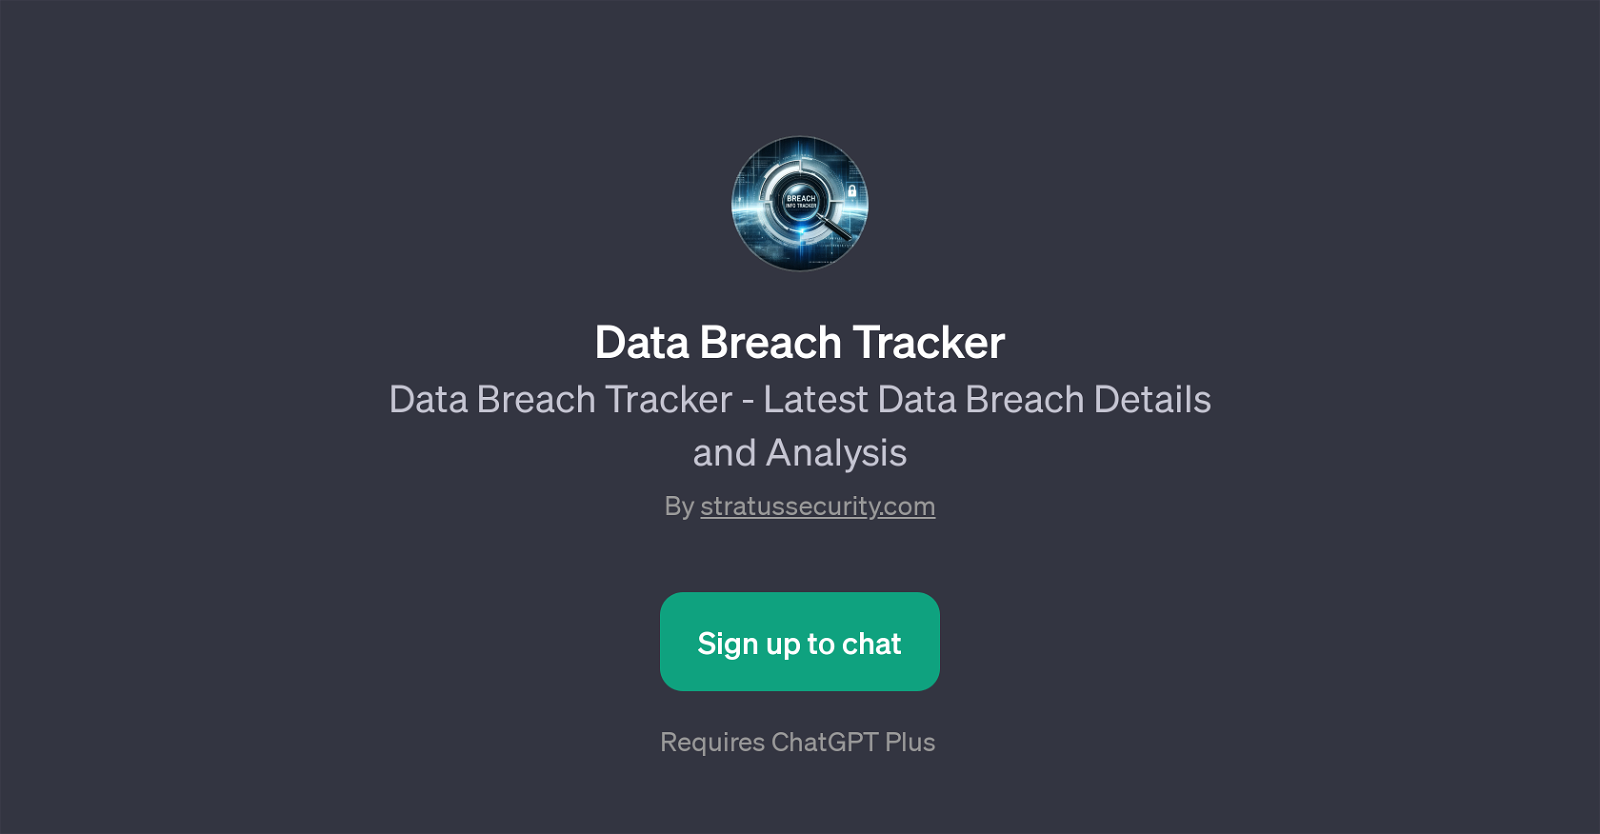 Data Breach Tracker website